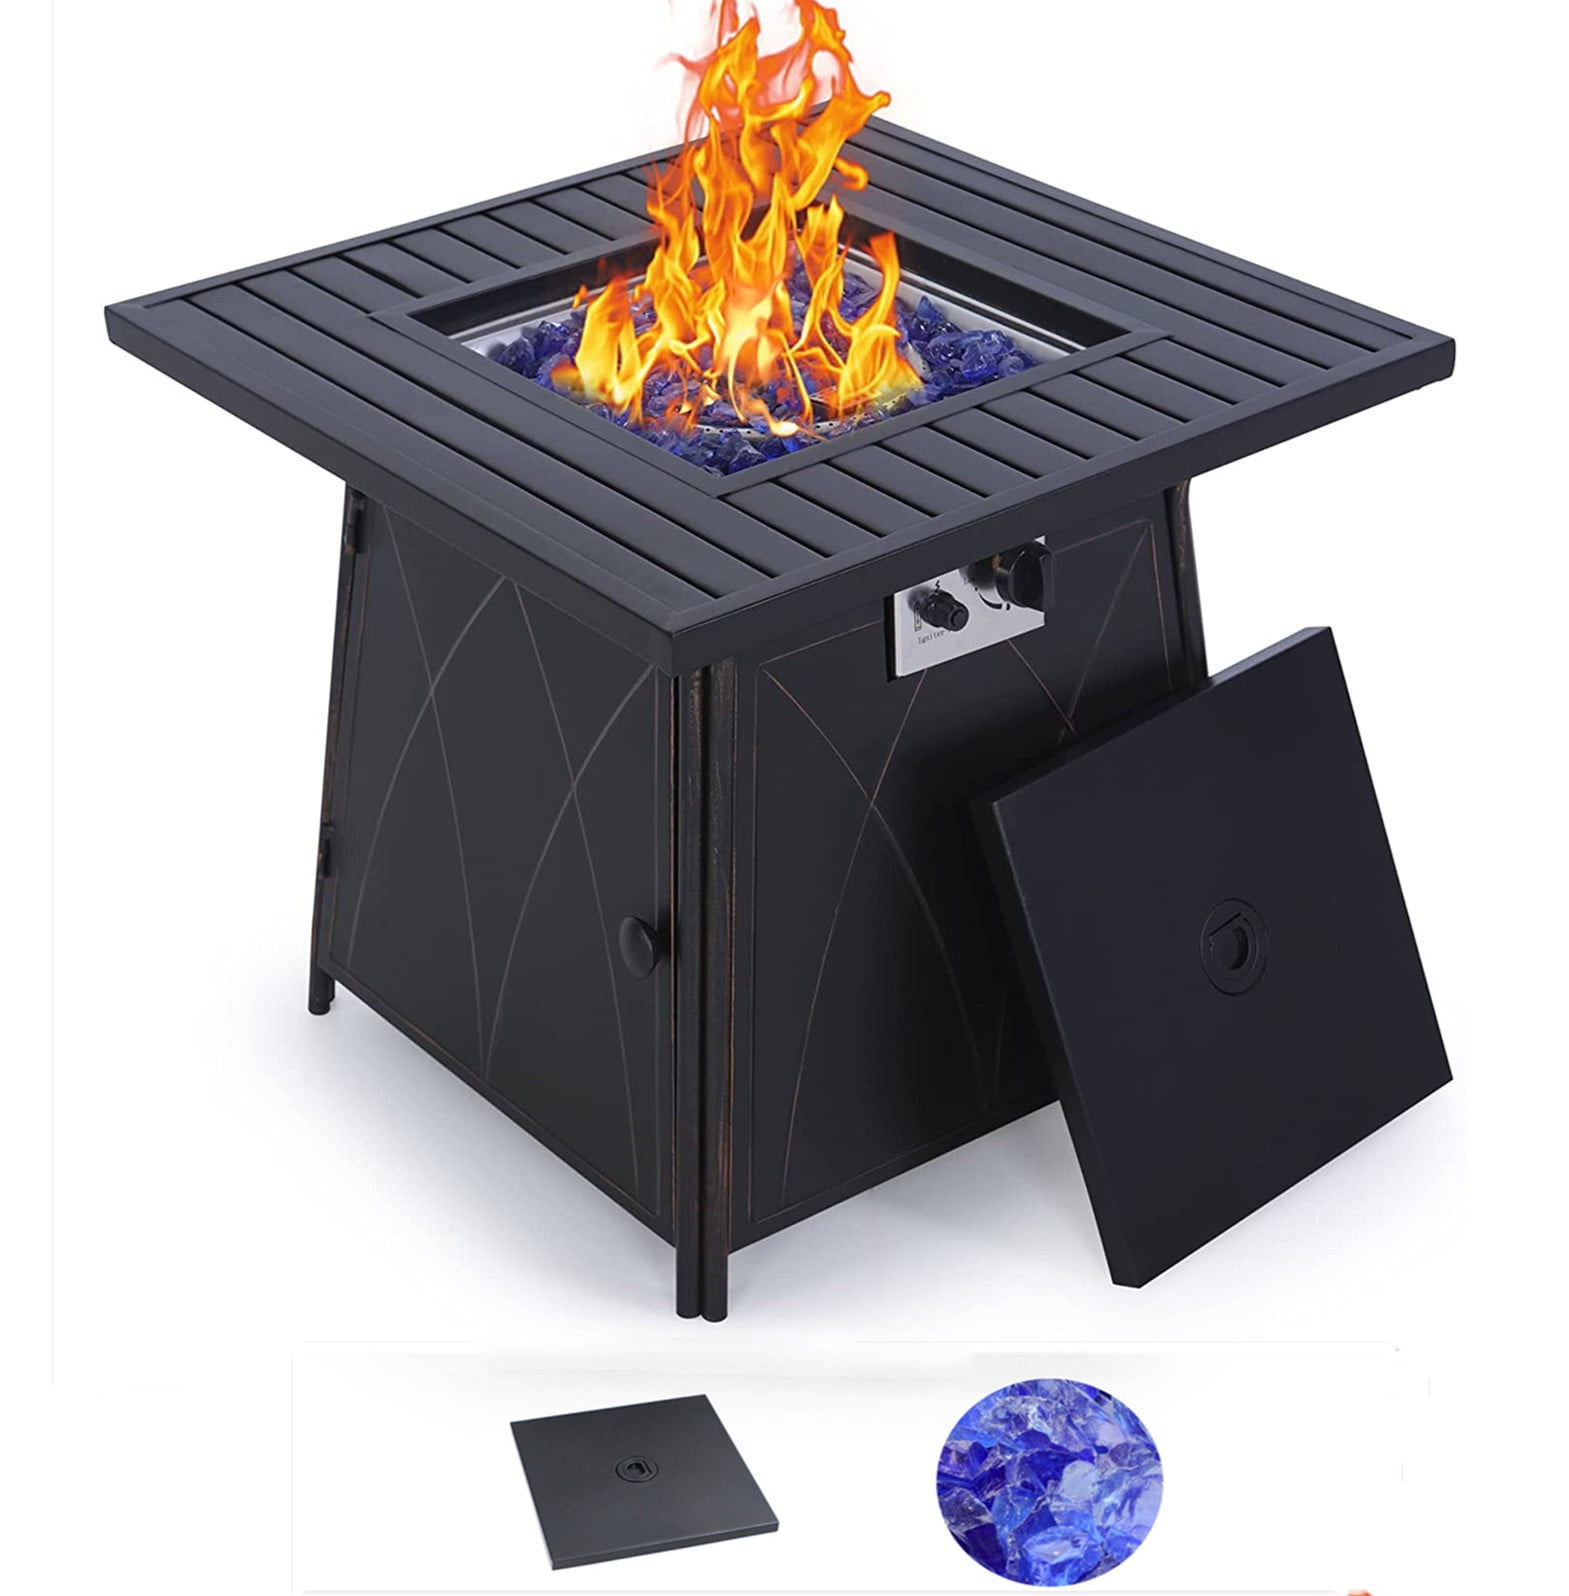 Mf Studio Gas Fire Pit Table 28 Inch, 50000 Btu Gas Fire Pit